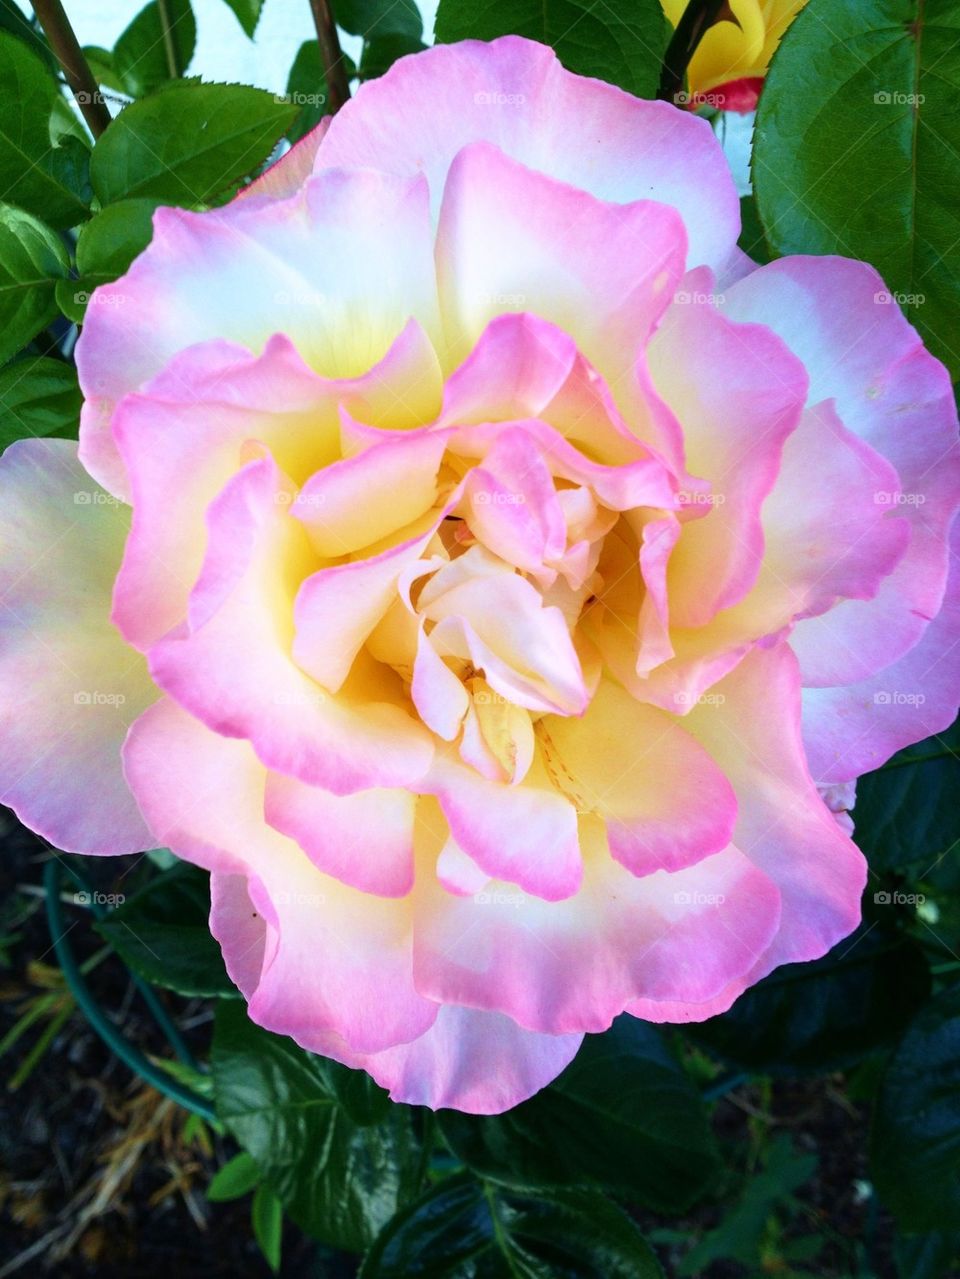 Peace rose